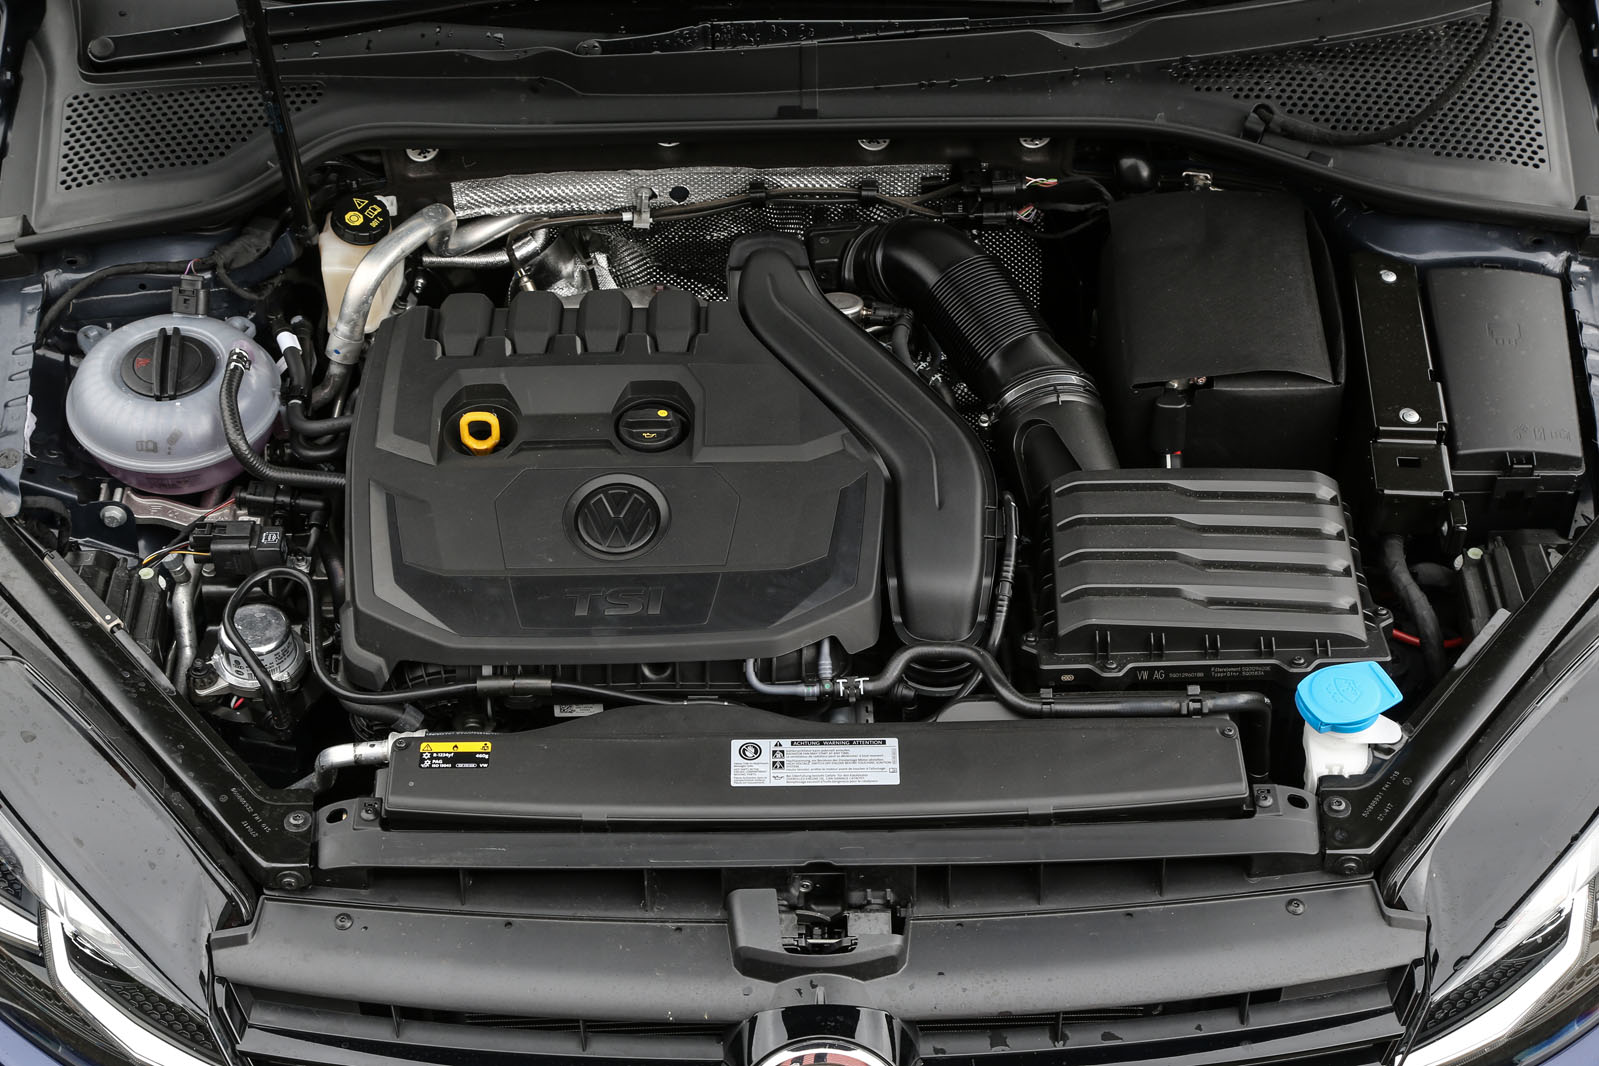 1.5-litre Volkswagen Golf TSI EVO engine